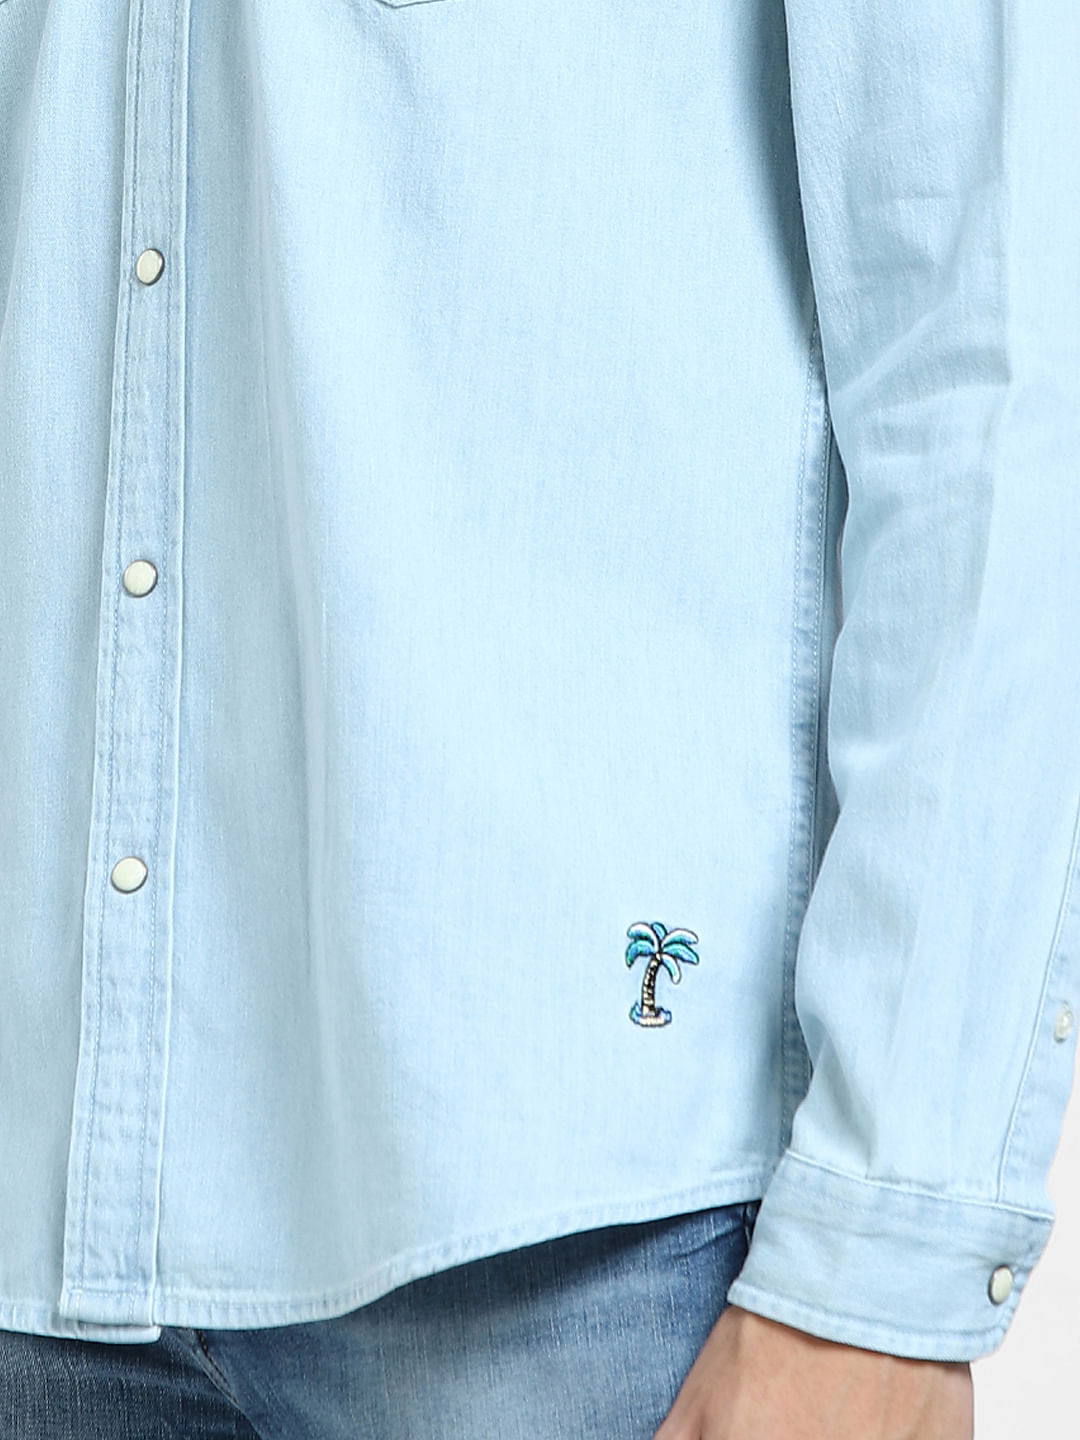 Men's Marlboro Vintage (Medium) Blue Denim Button Front Long Sleeve Shirt |  eBay